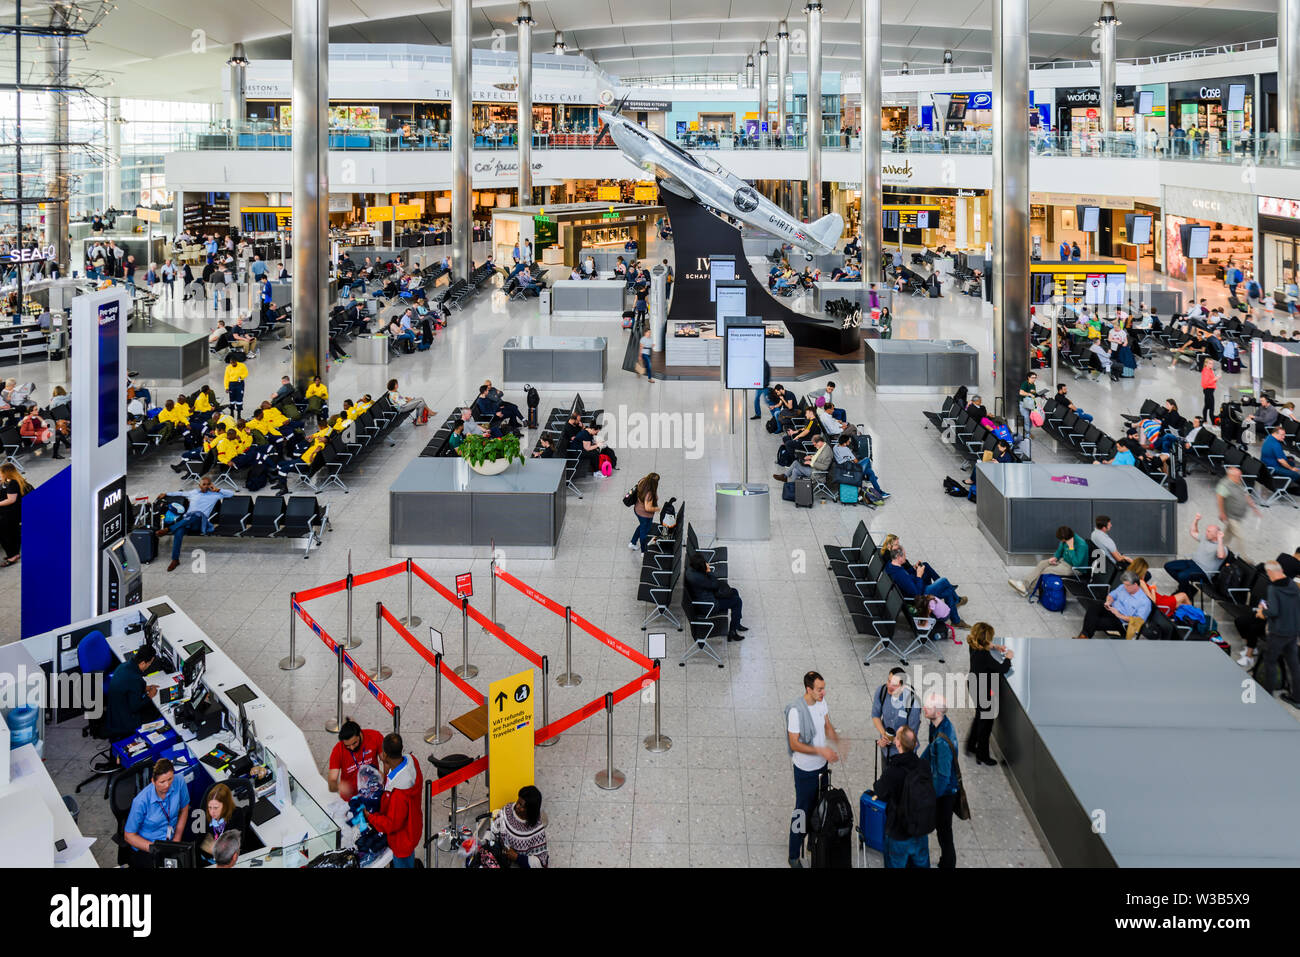 Passengers waiting for flights at Terminal 3, Heathrow Airport, London, England, United Kingdom, UK Stock Photo